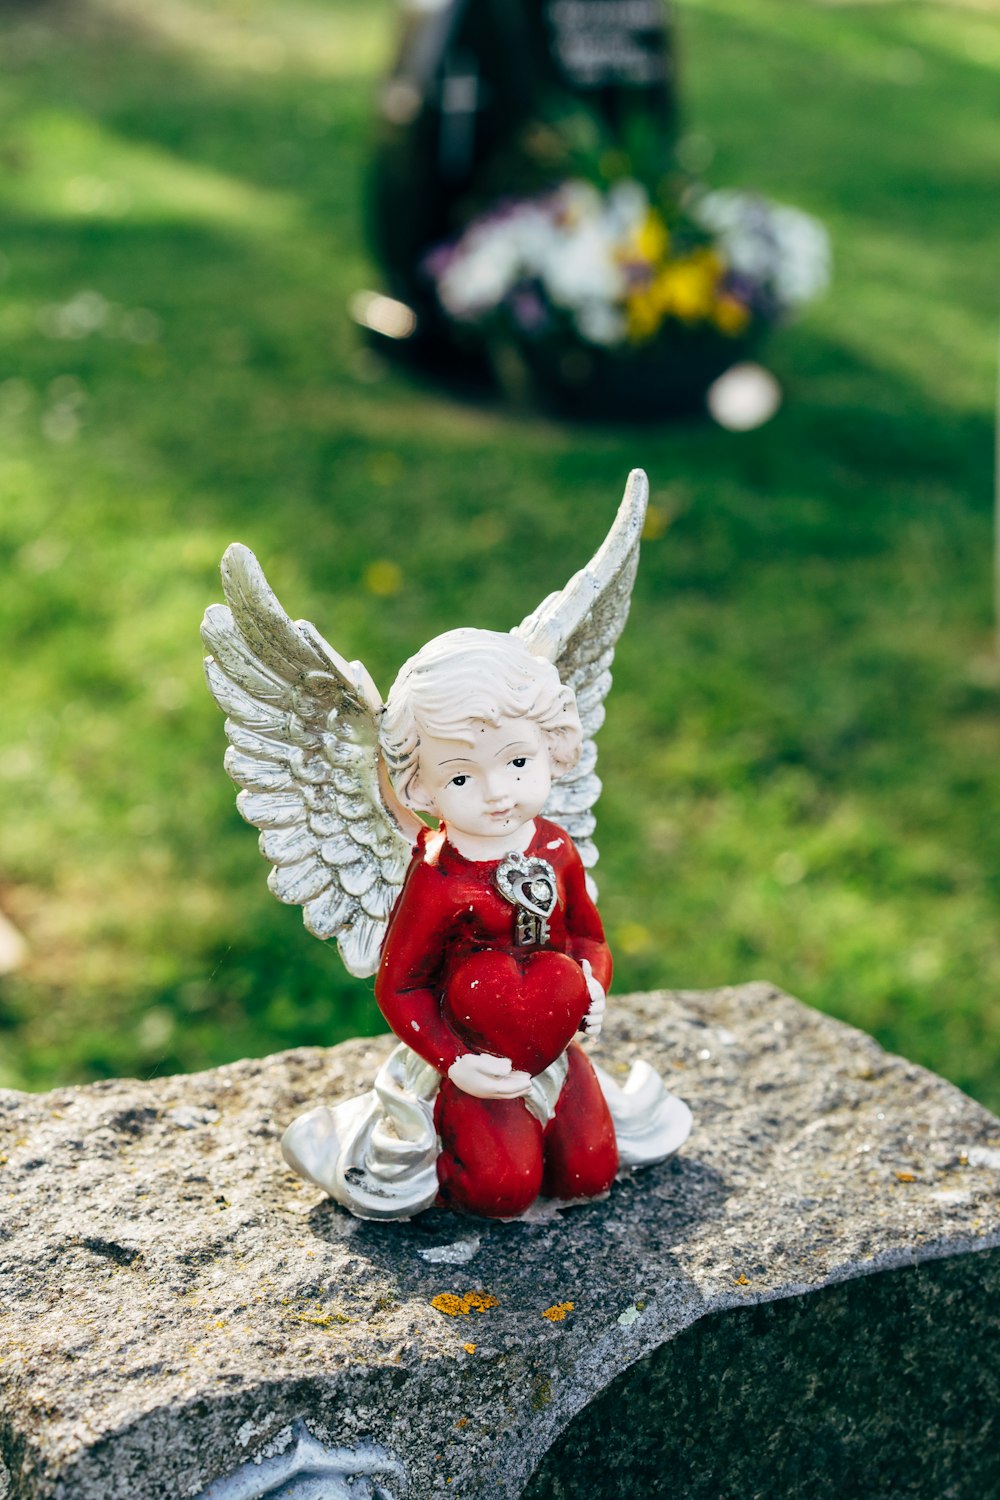 angel ceramic figurine on gray concrete surface